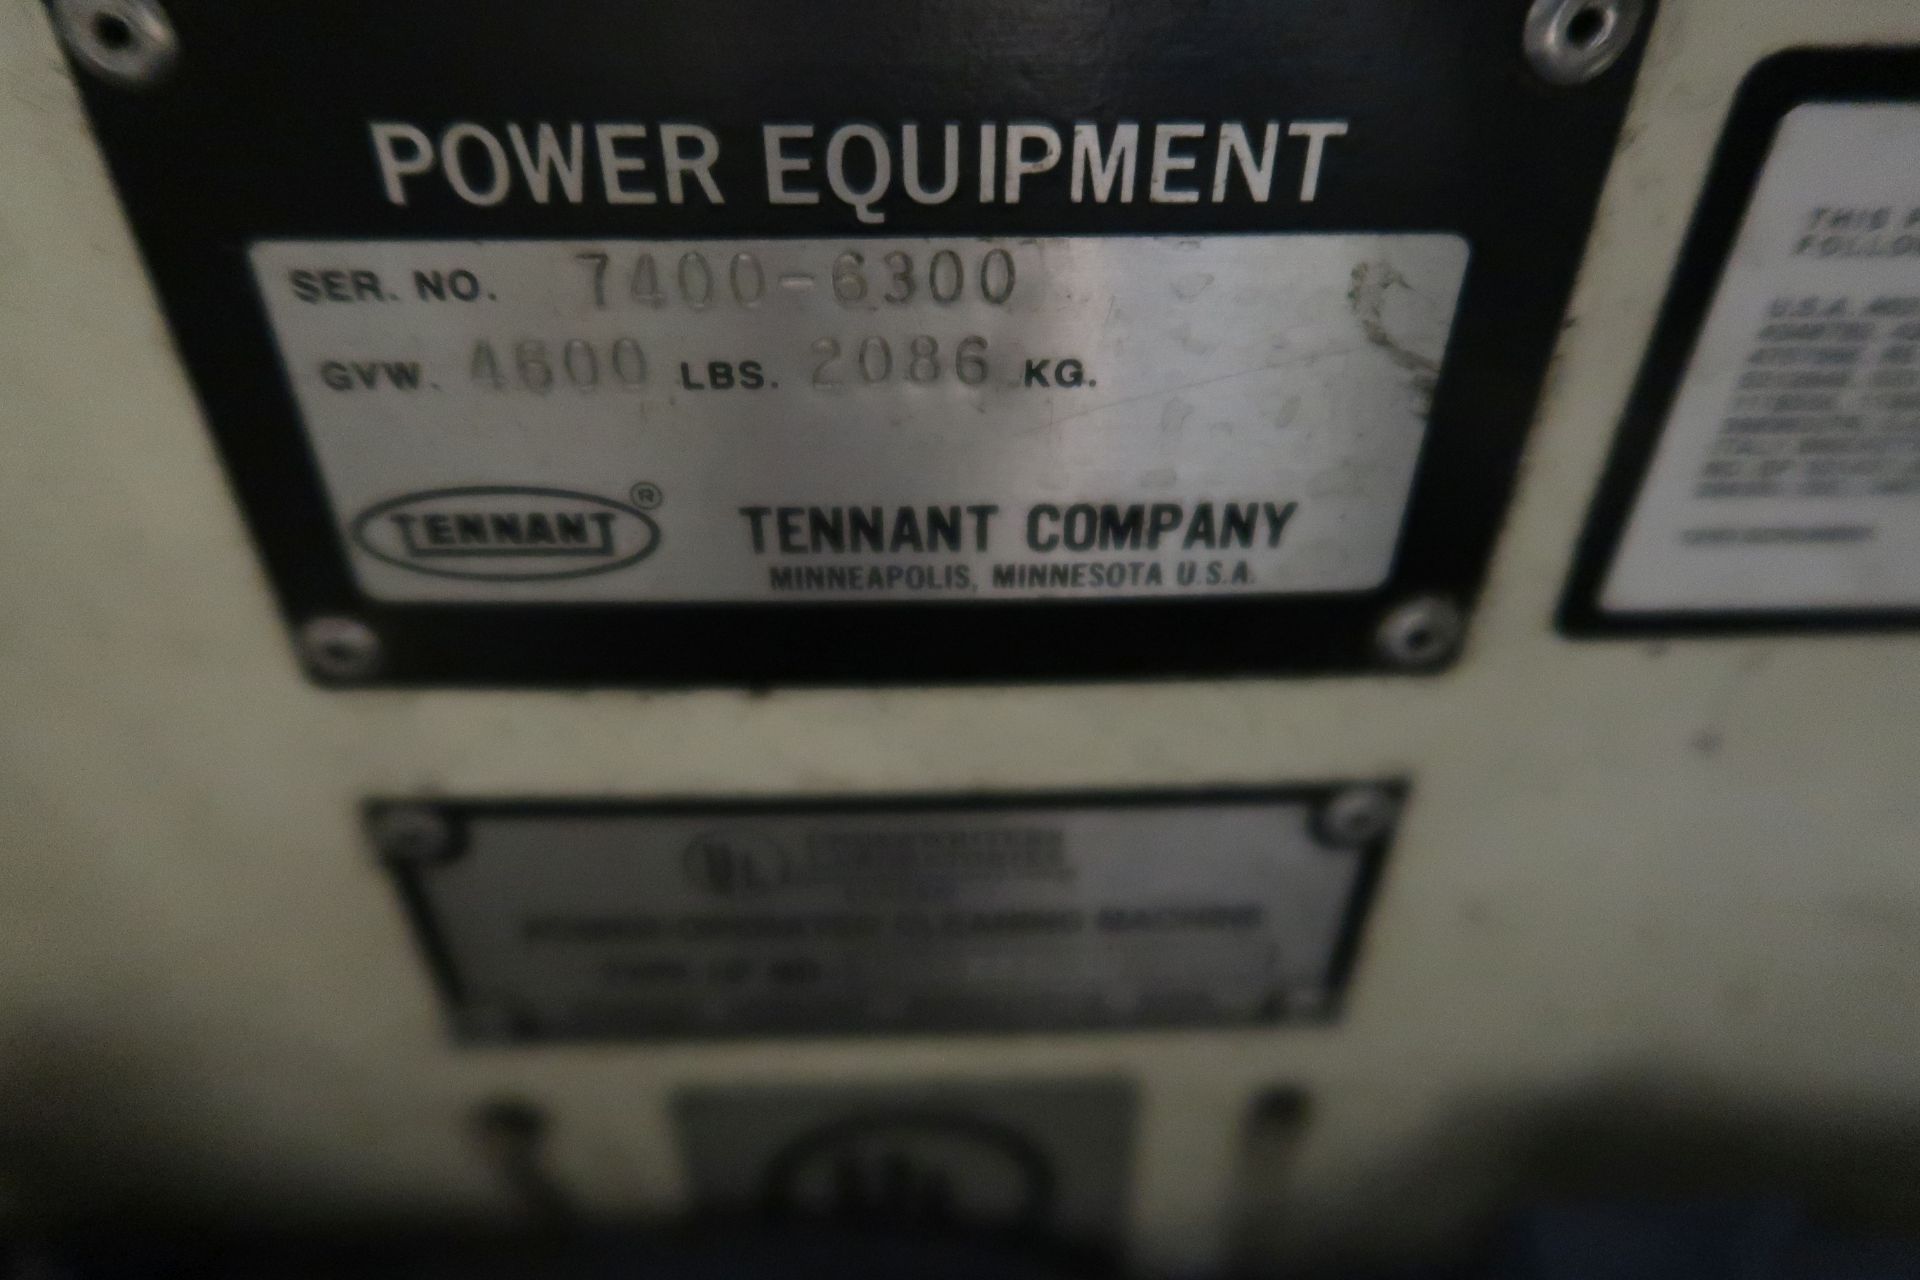 TENNANT MODEL 7400 LP GAS POWERED SIT DOWN TYPE FLOOR SCRUBBER; S/N 7400-6300, GVW 4,600 LB. 220 - Image 9 of 12